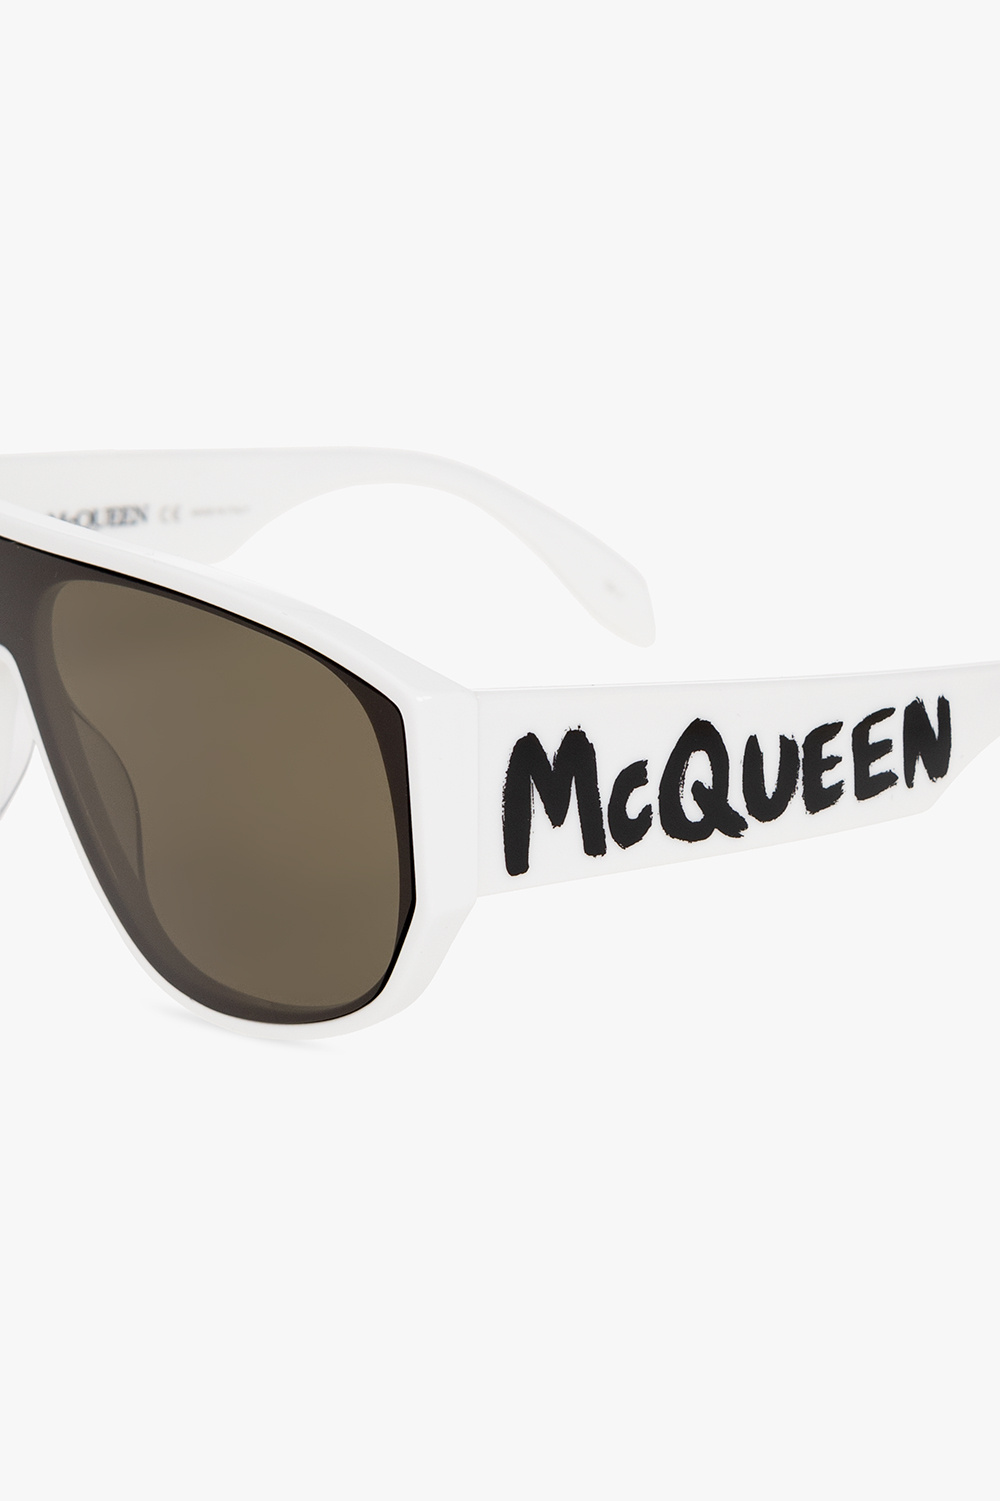 Alexander McQueen sunglasses GG0956S with logo